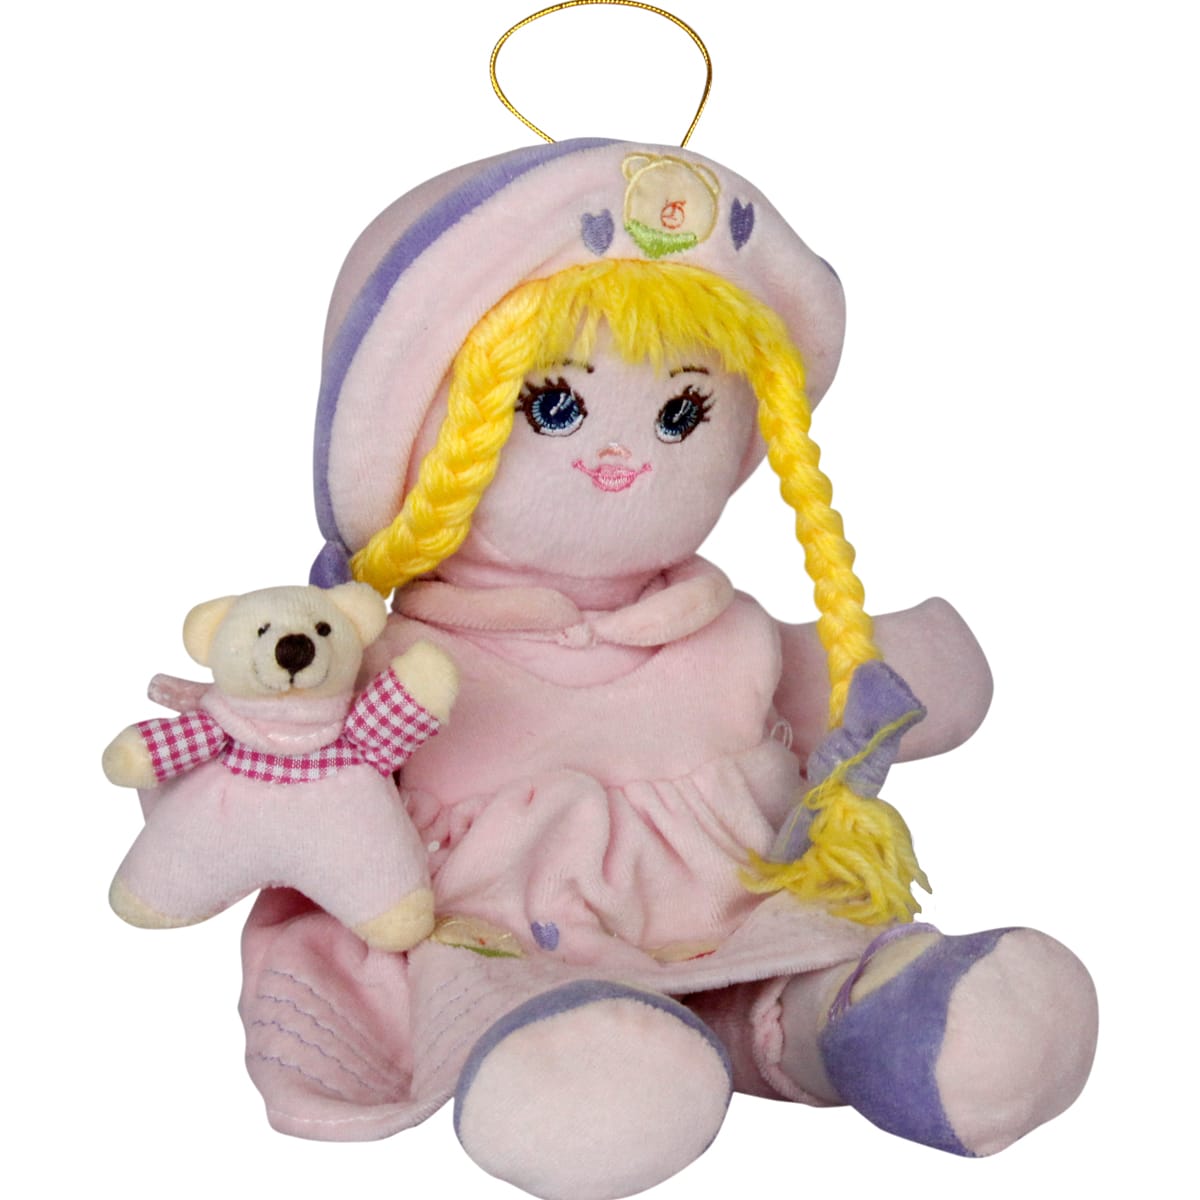 Soft doll with bear